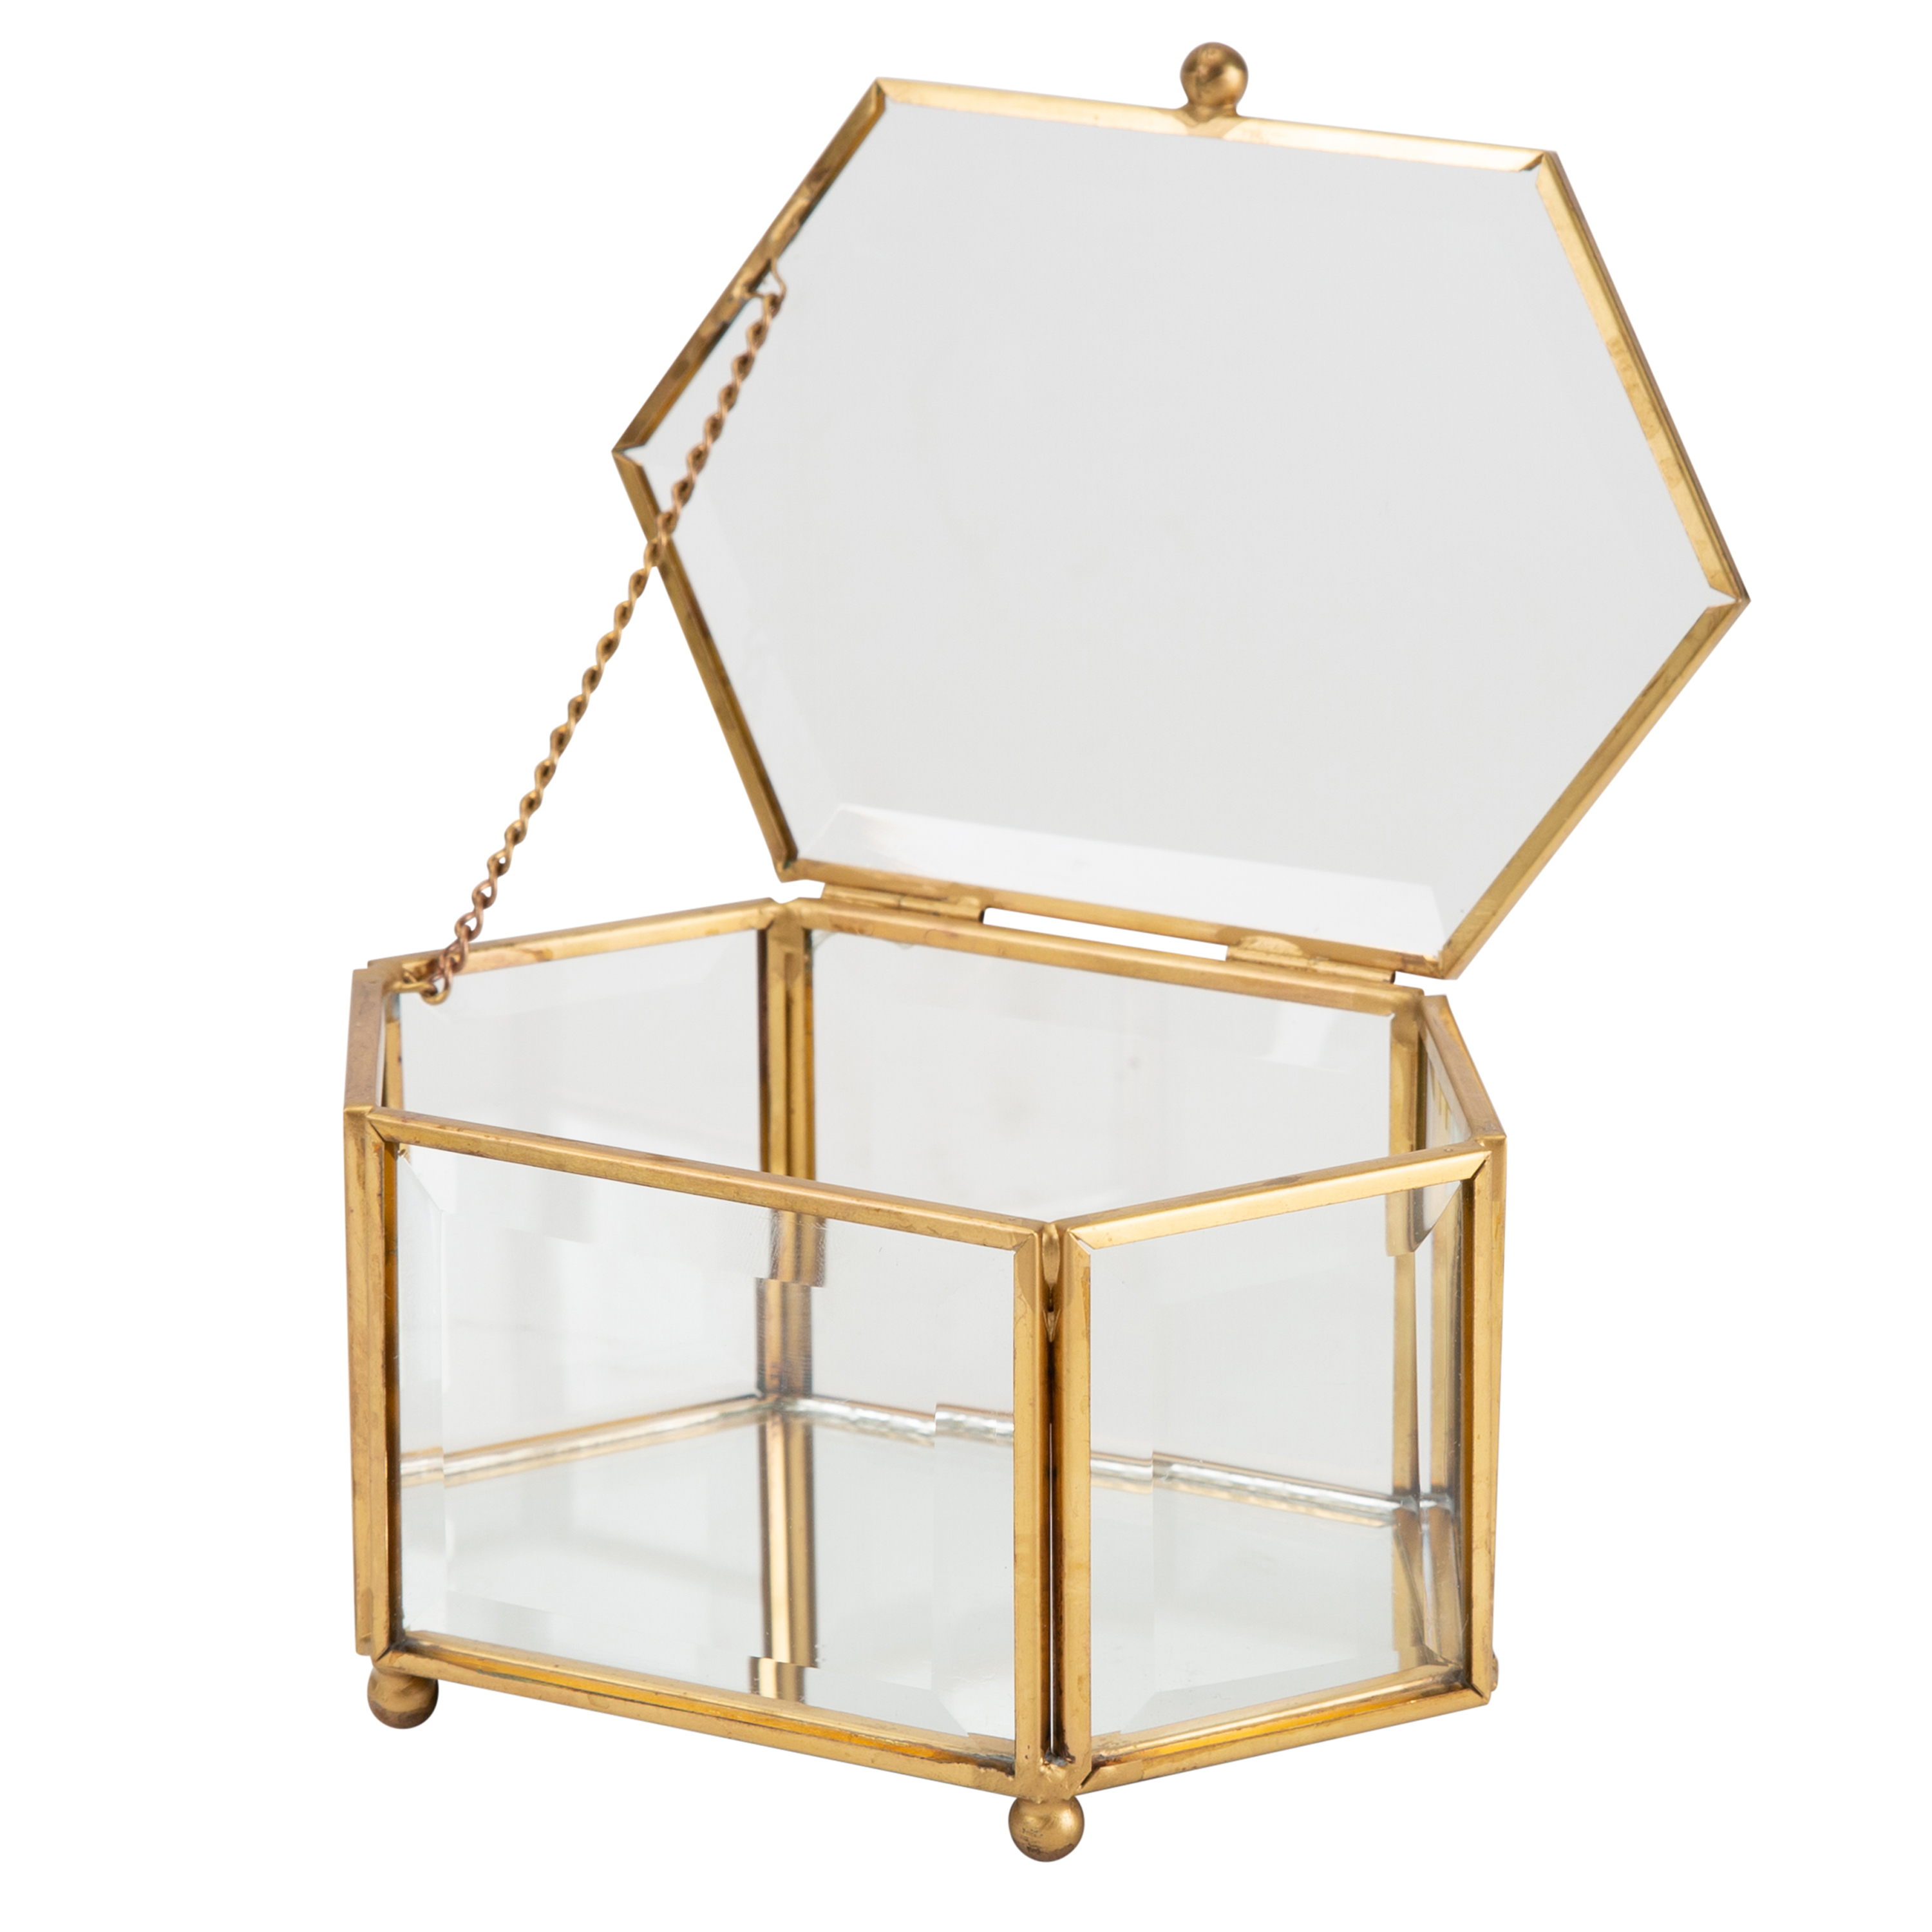 Home Details Vintage Mirrored Bottom Diamond Shape Glass Keepsake Box in Gold - image 1 of 9